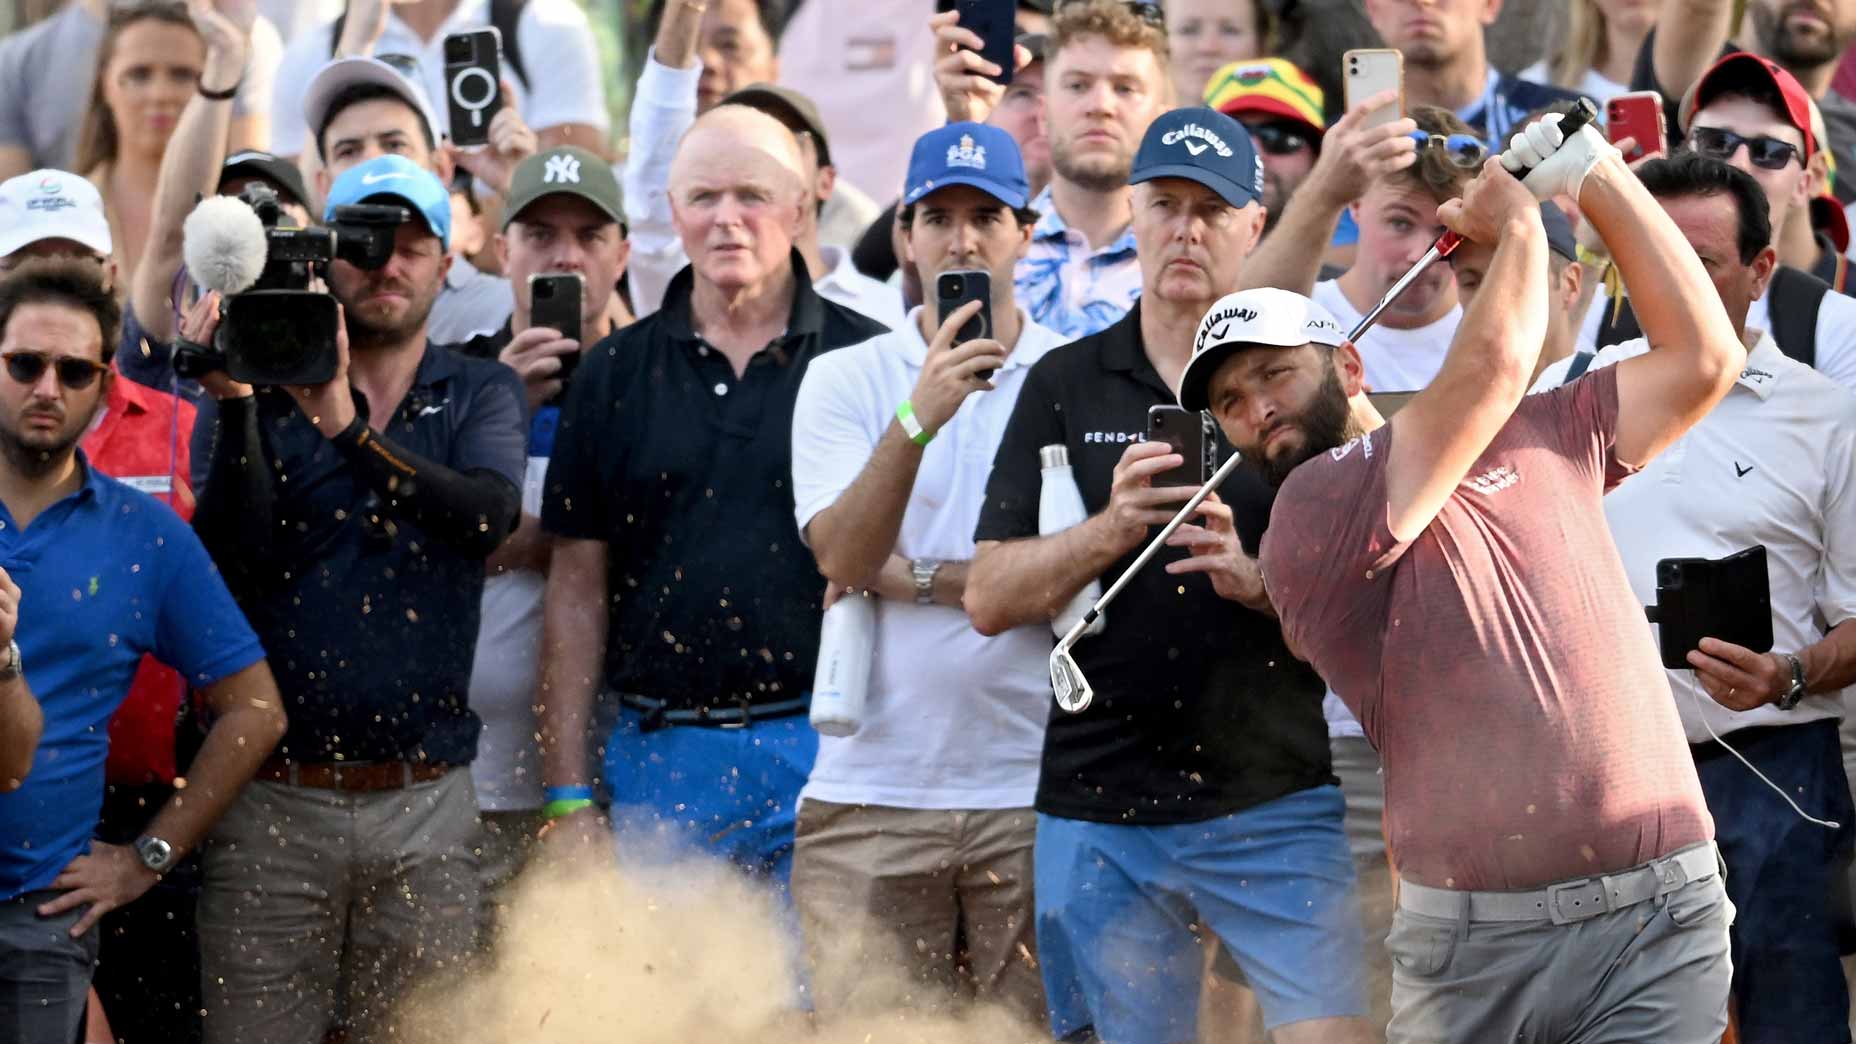 Jon Rahm hits shot among crowd at DP World Tour Championship